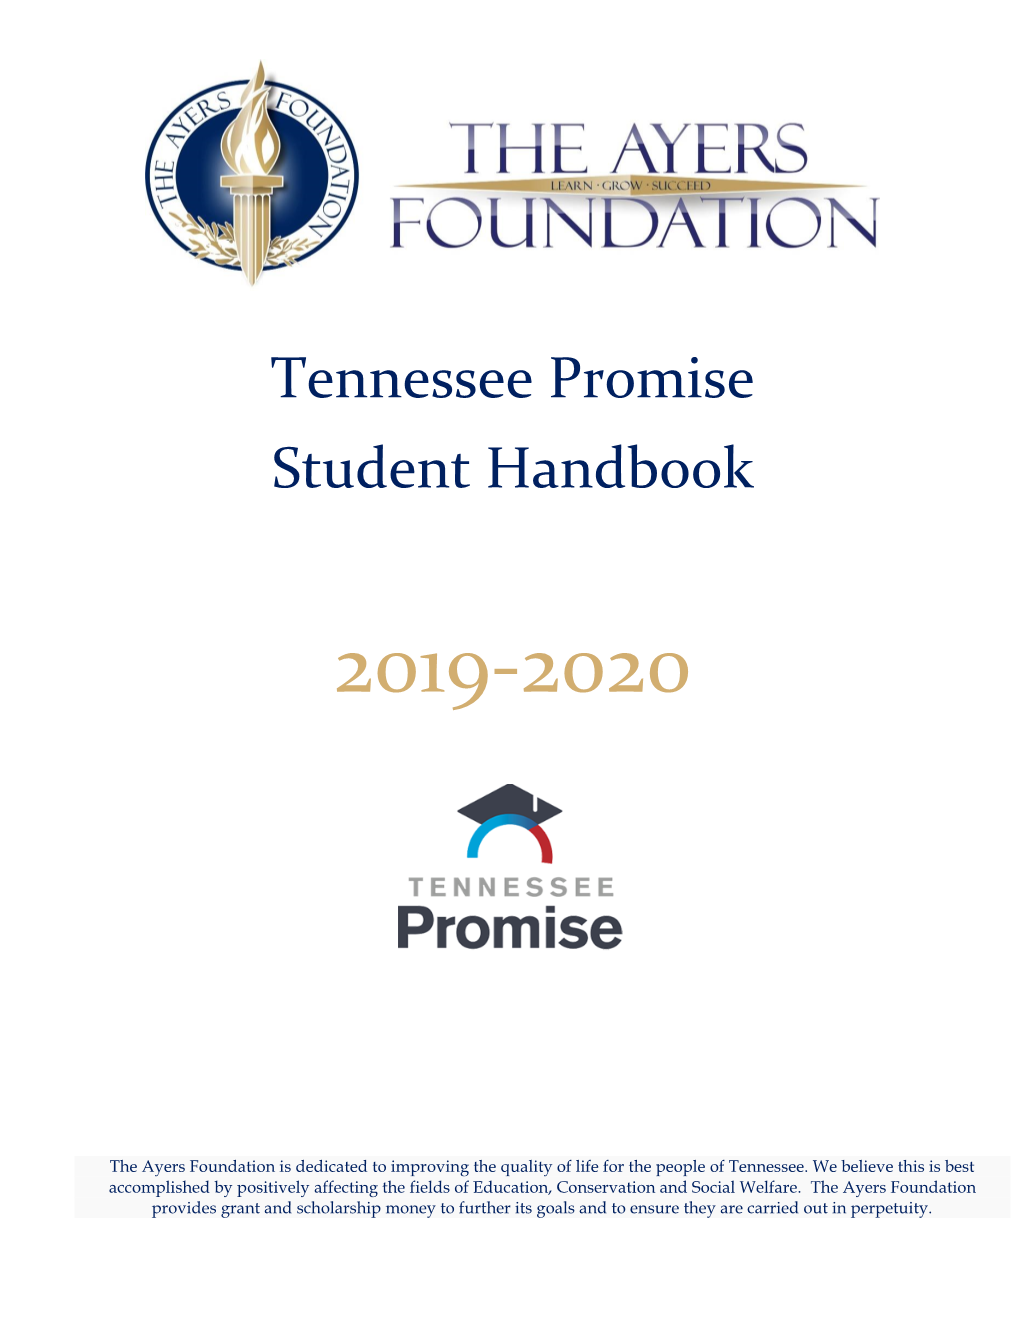 Tennessee Promise Student Handbook